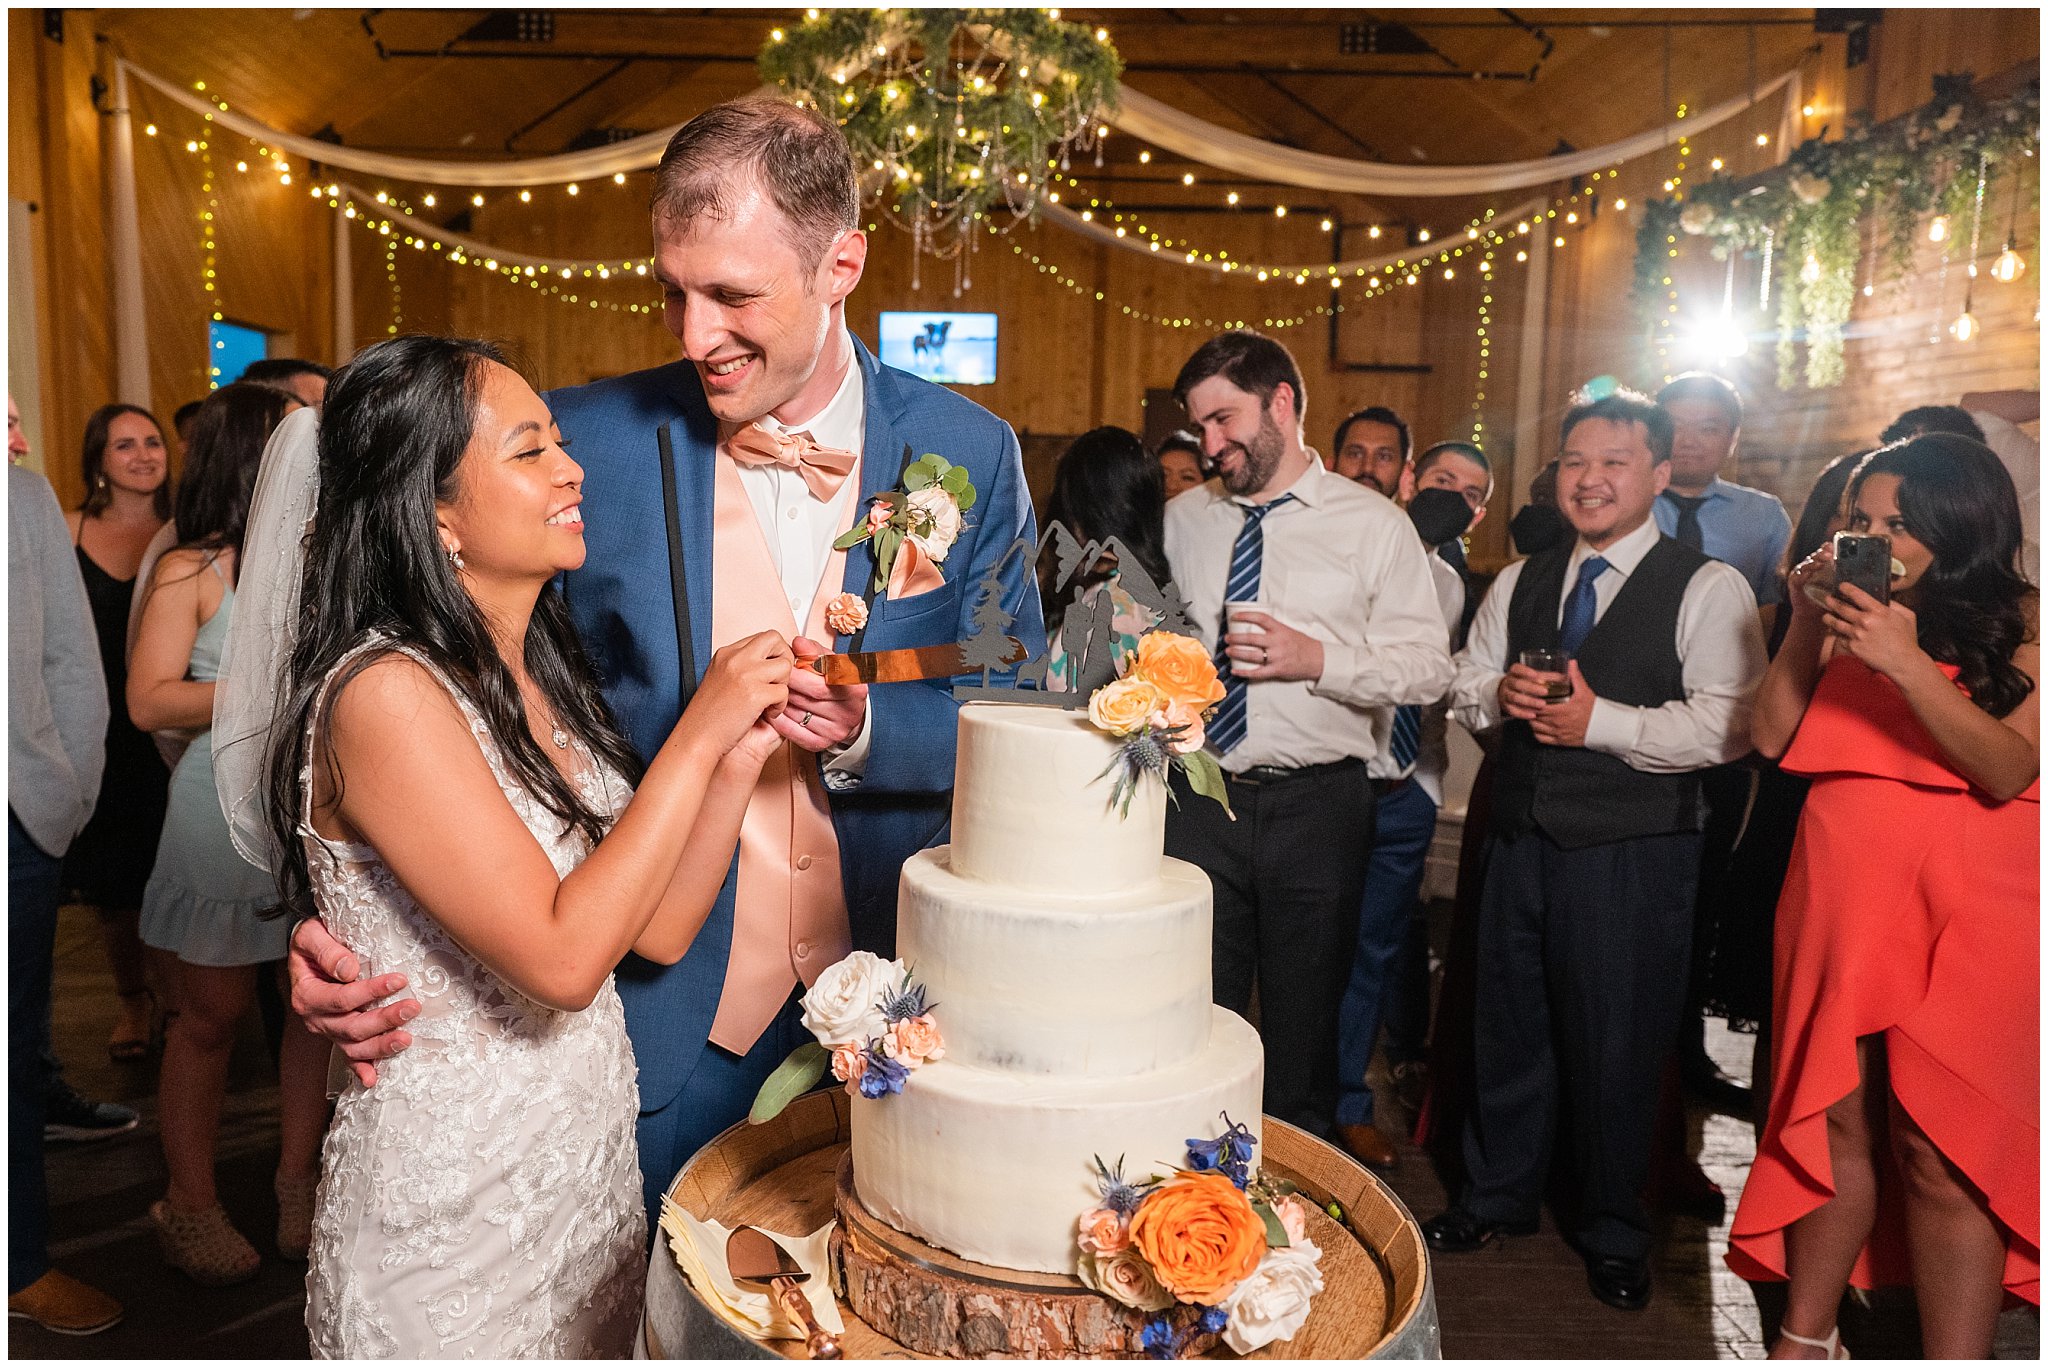 Cake cutting during reception in a barn | Oak Hills Utah Destination Wedding | Jessie and Dallin Photography